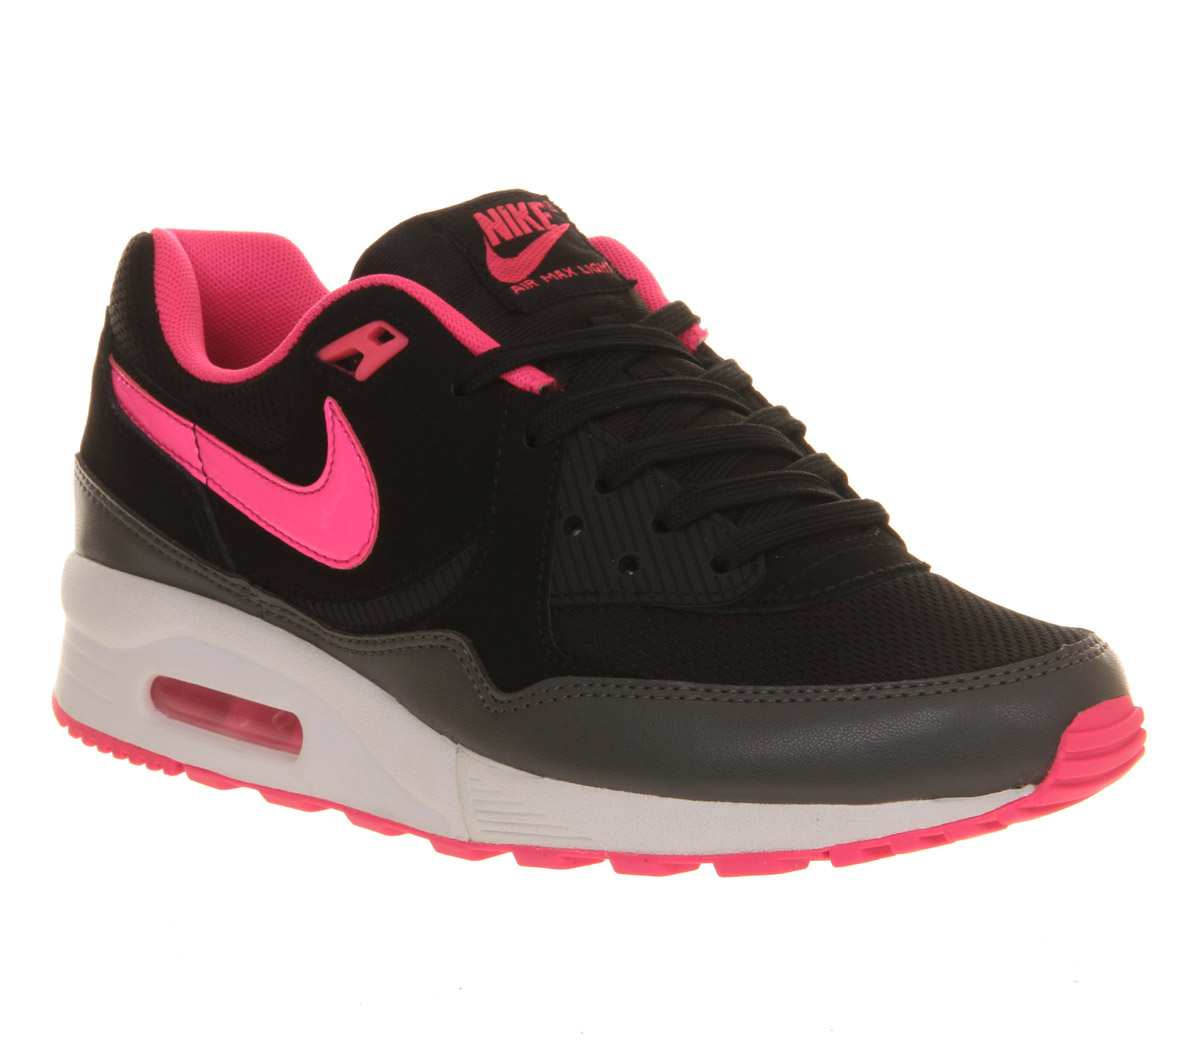 NikeAir Max Light EssentialBlack Hyper Pink